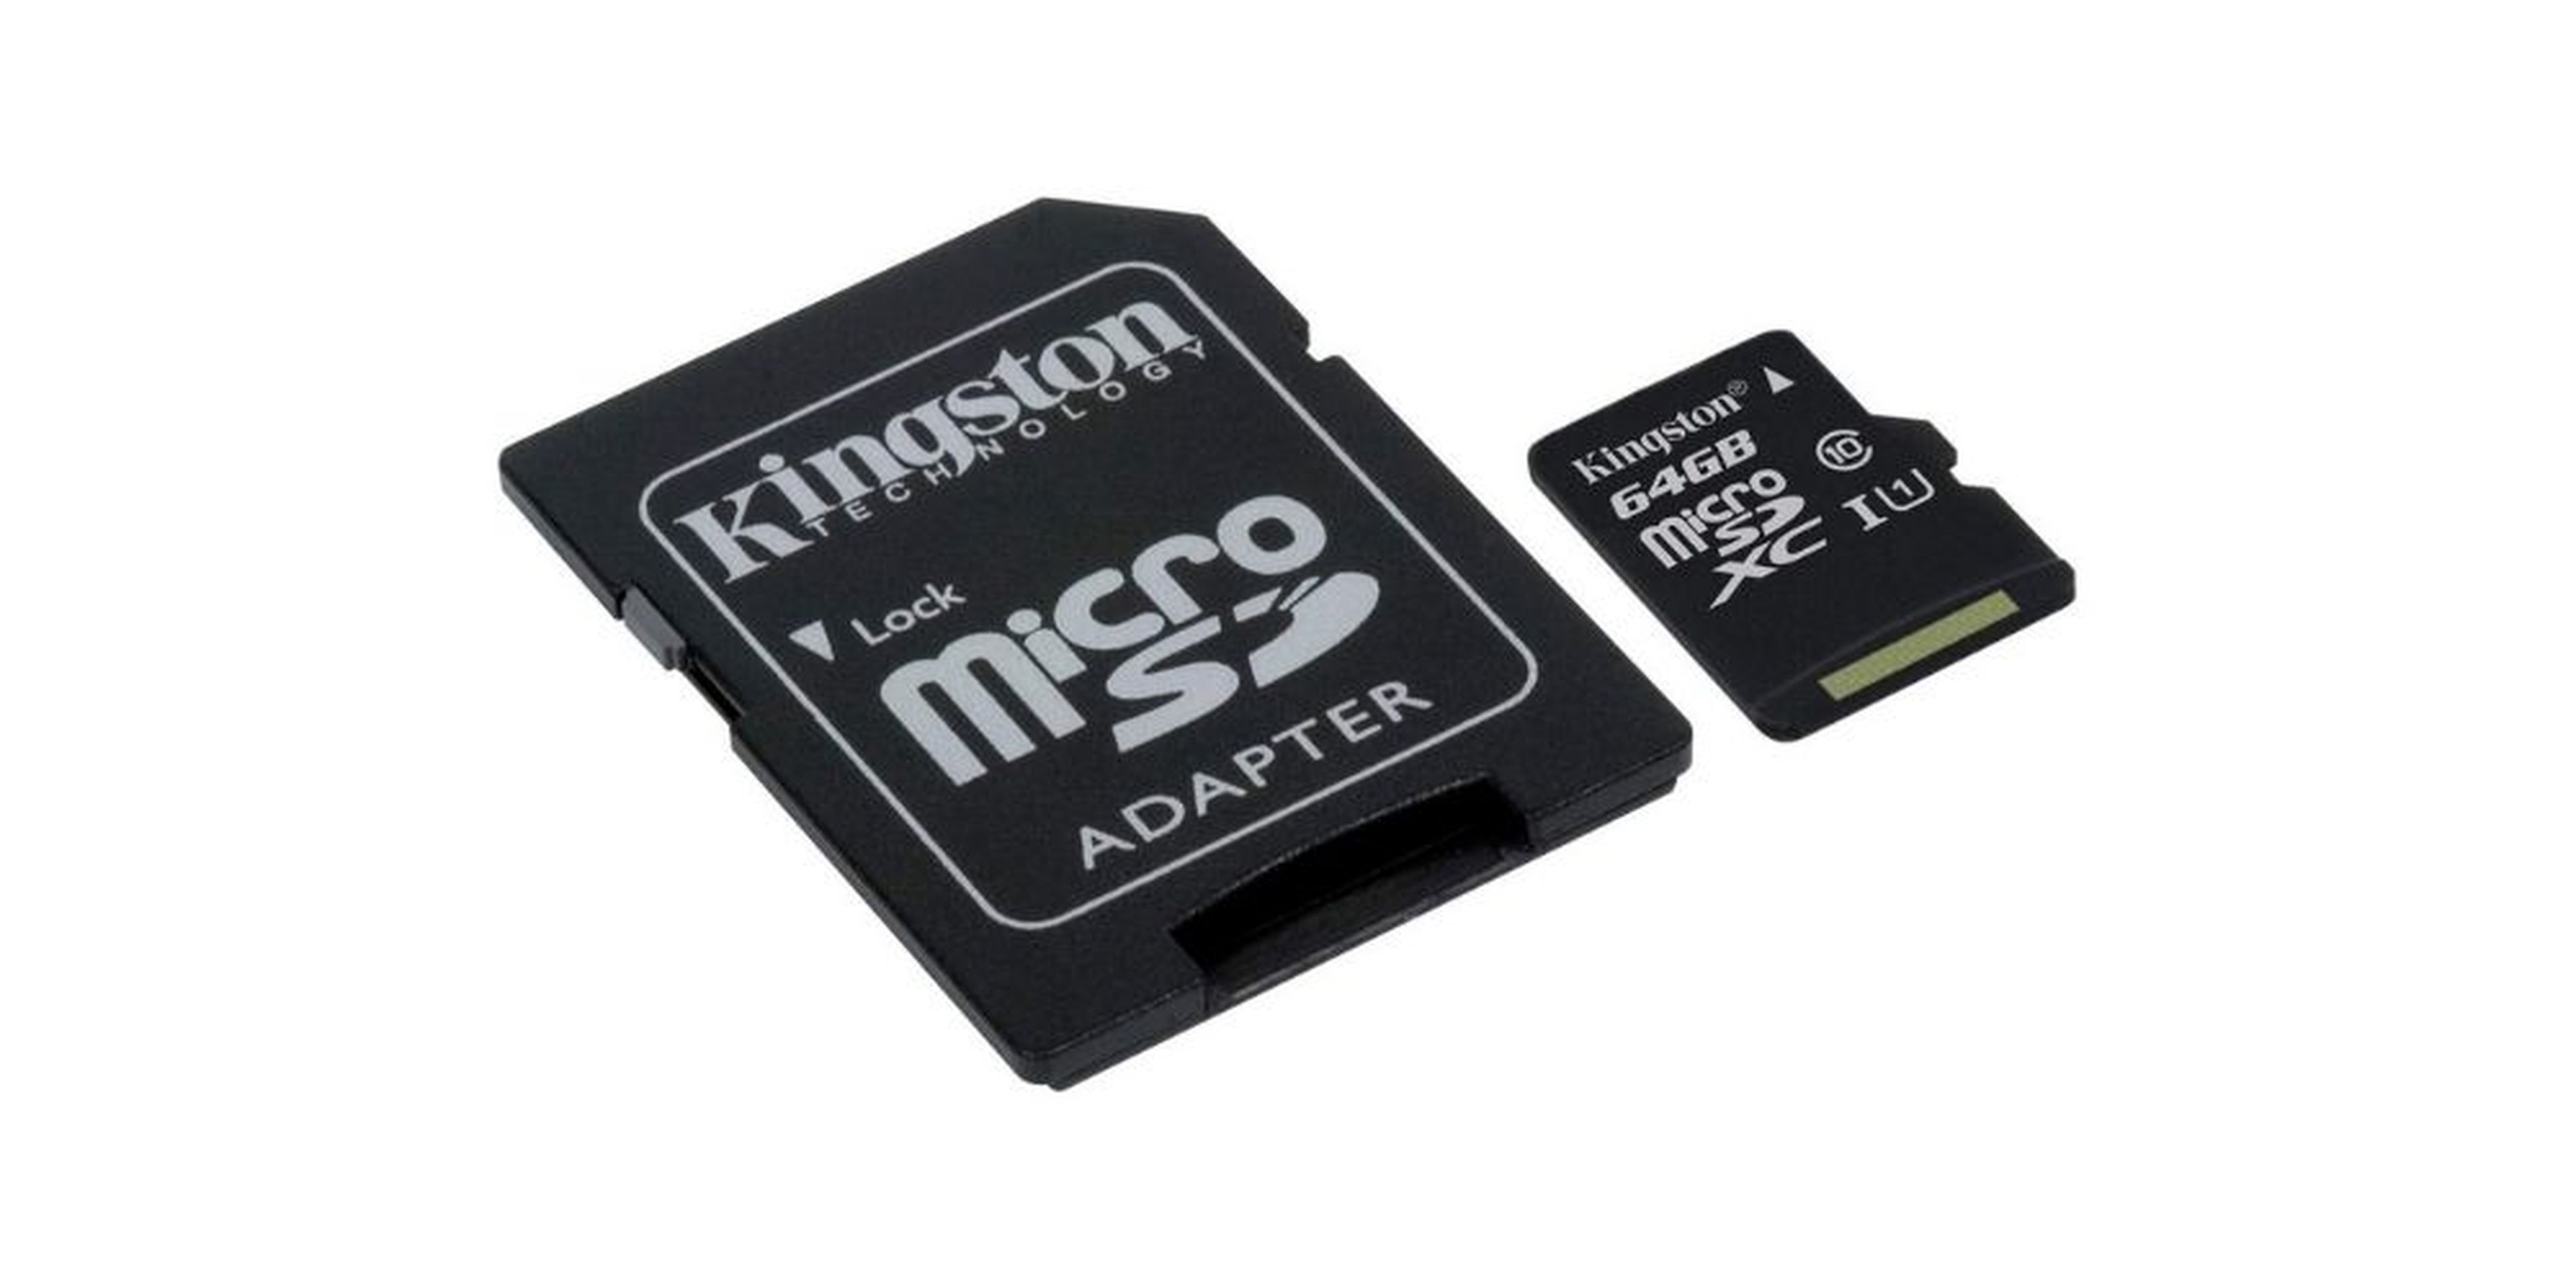 Mejor tarjeta microSD barata por menos de 10 euros